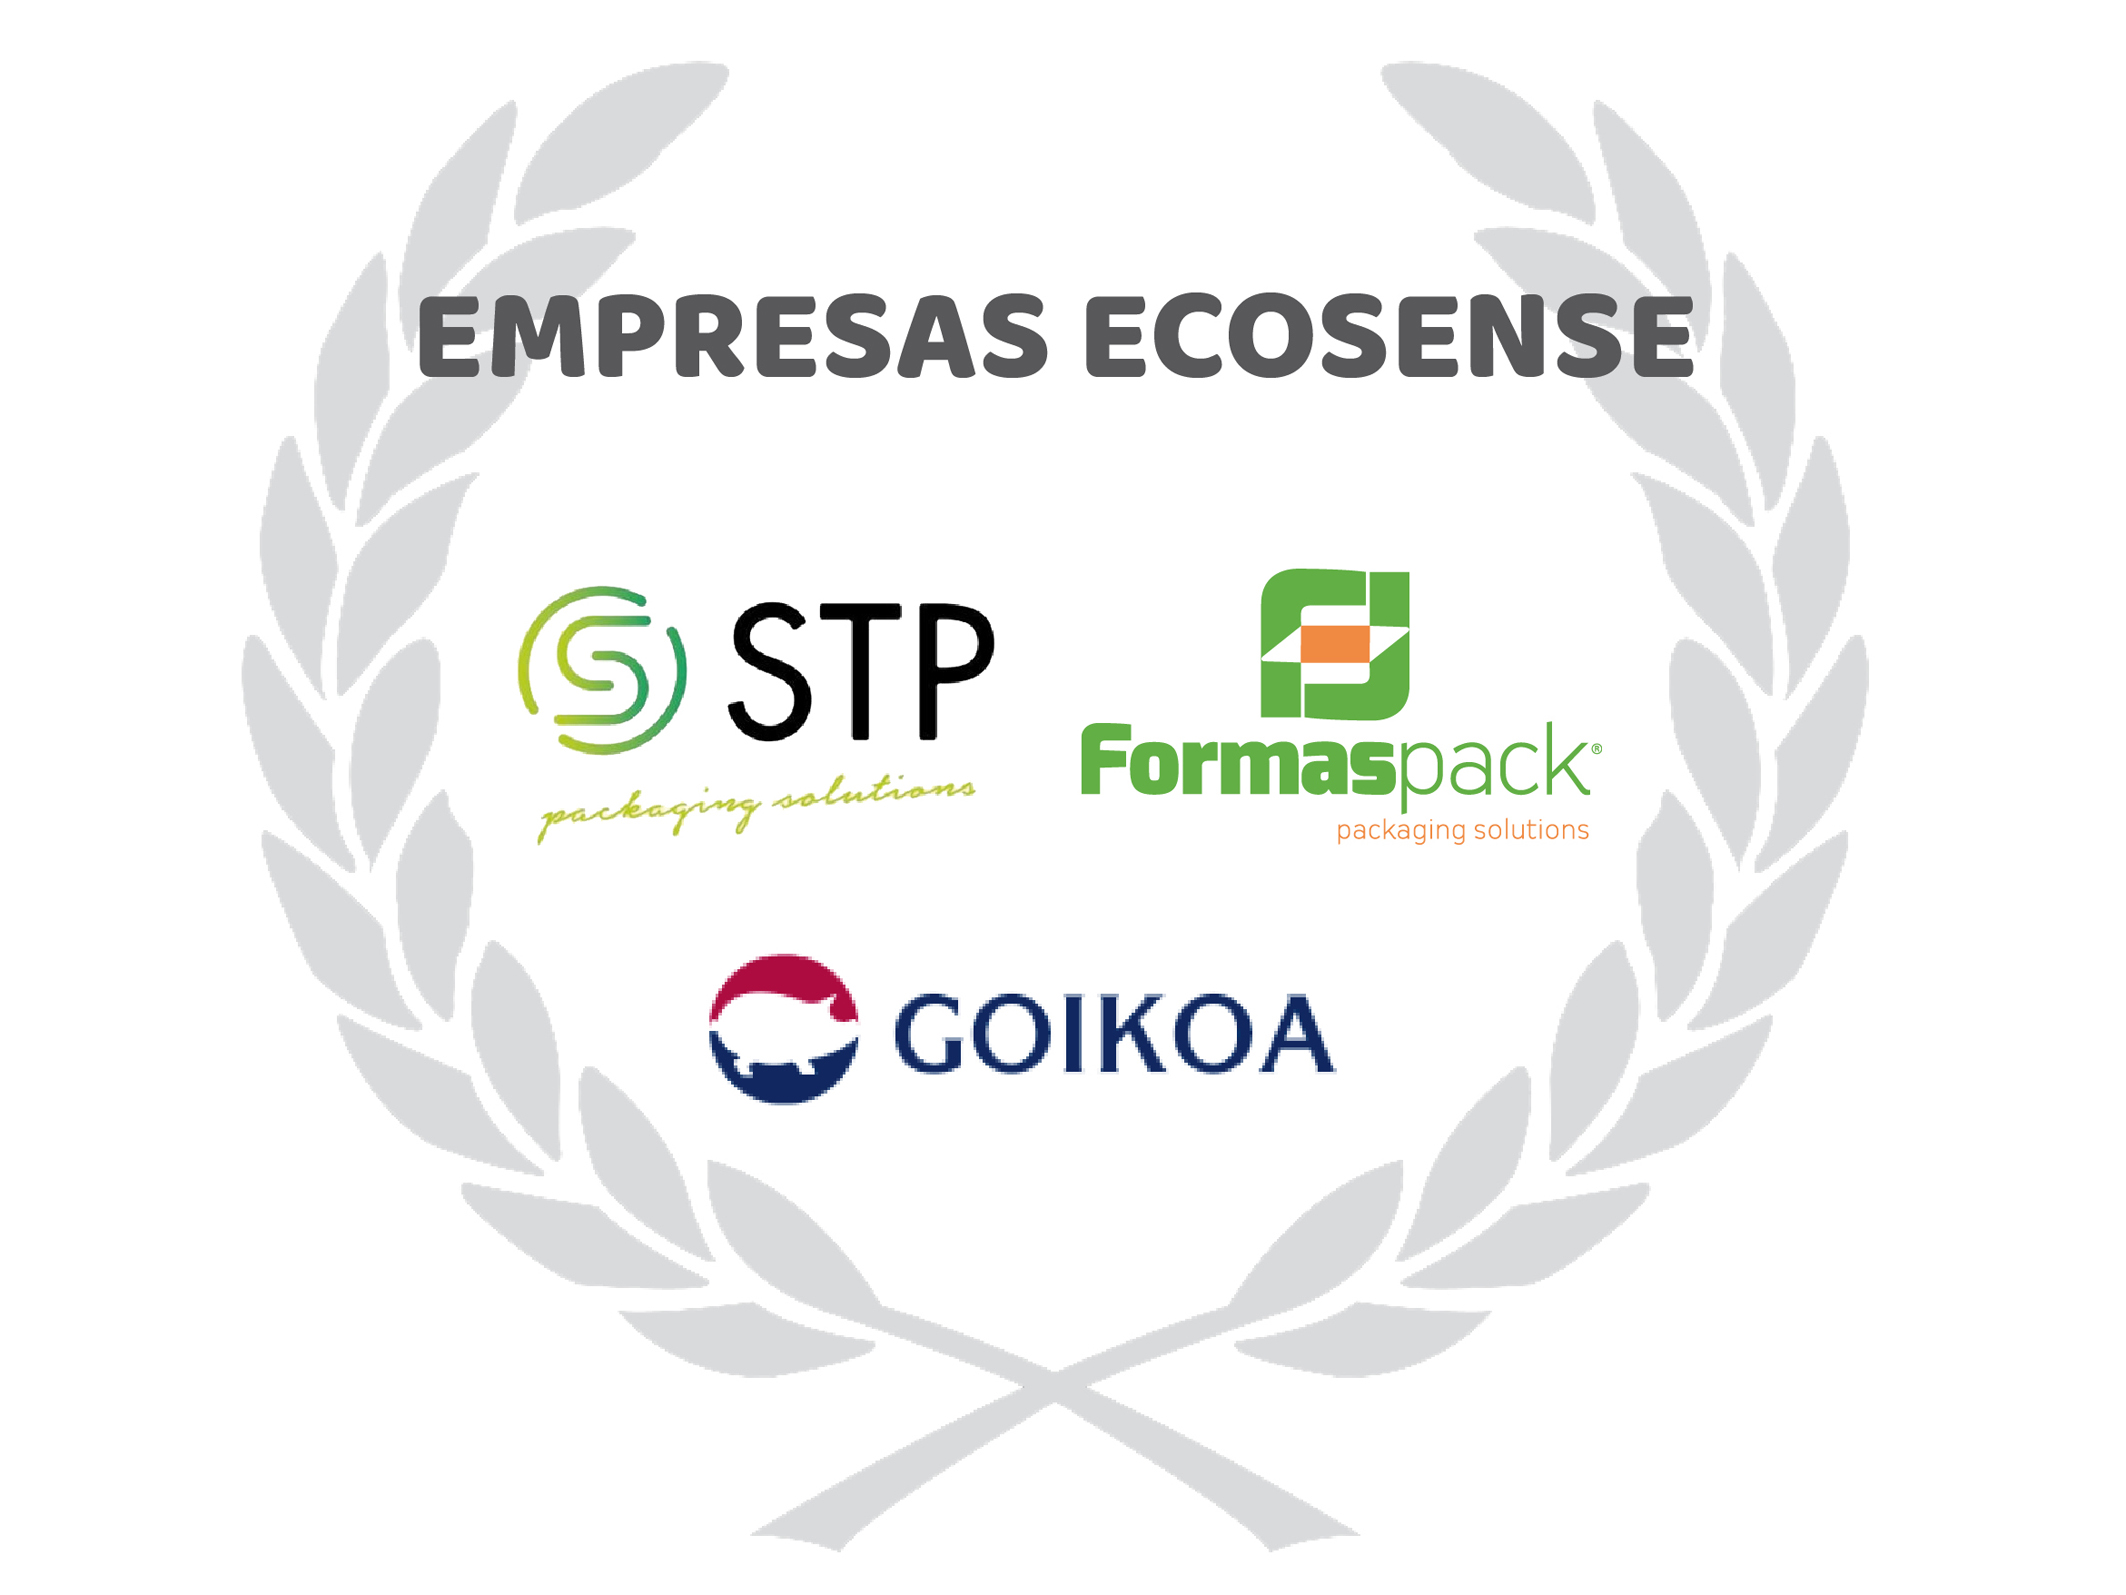 STP, FORMASPACK and GOIKOA, the new ECOSENSE companies